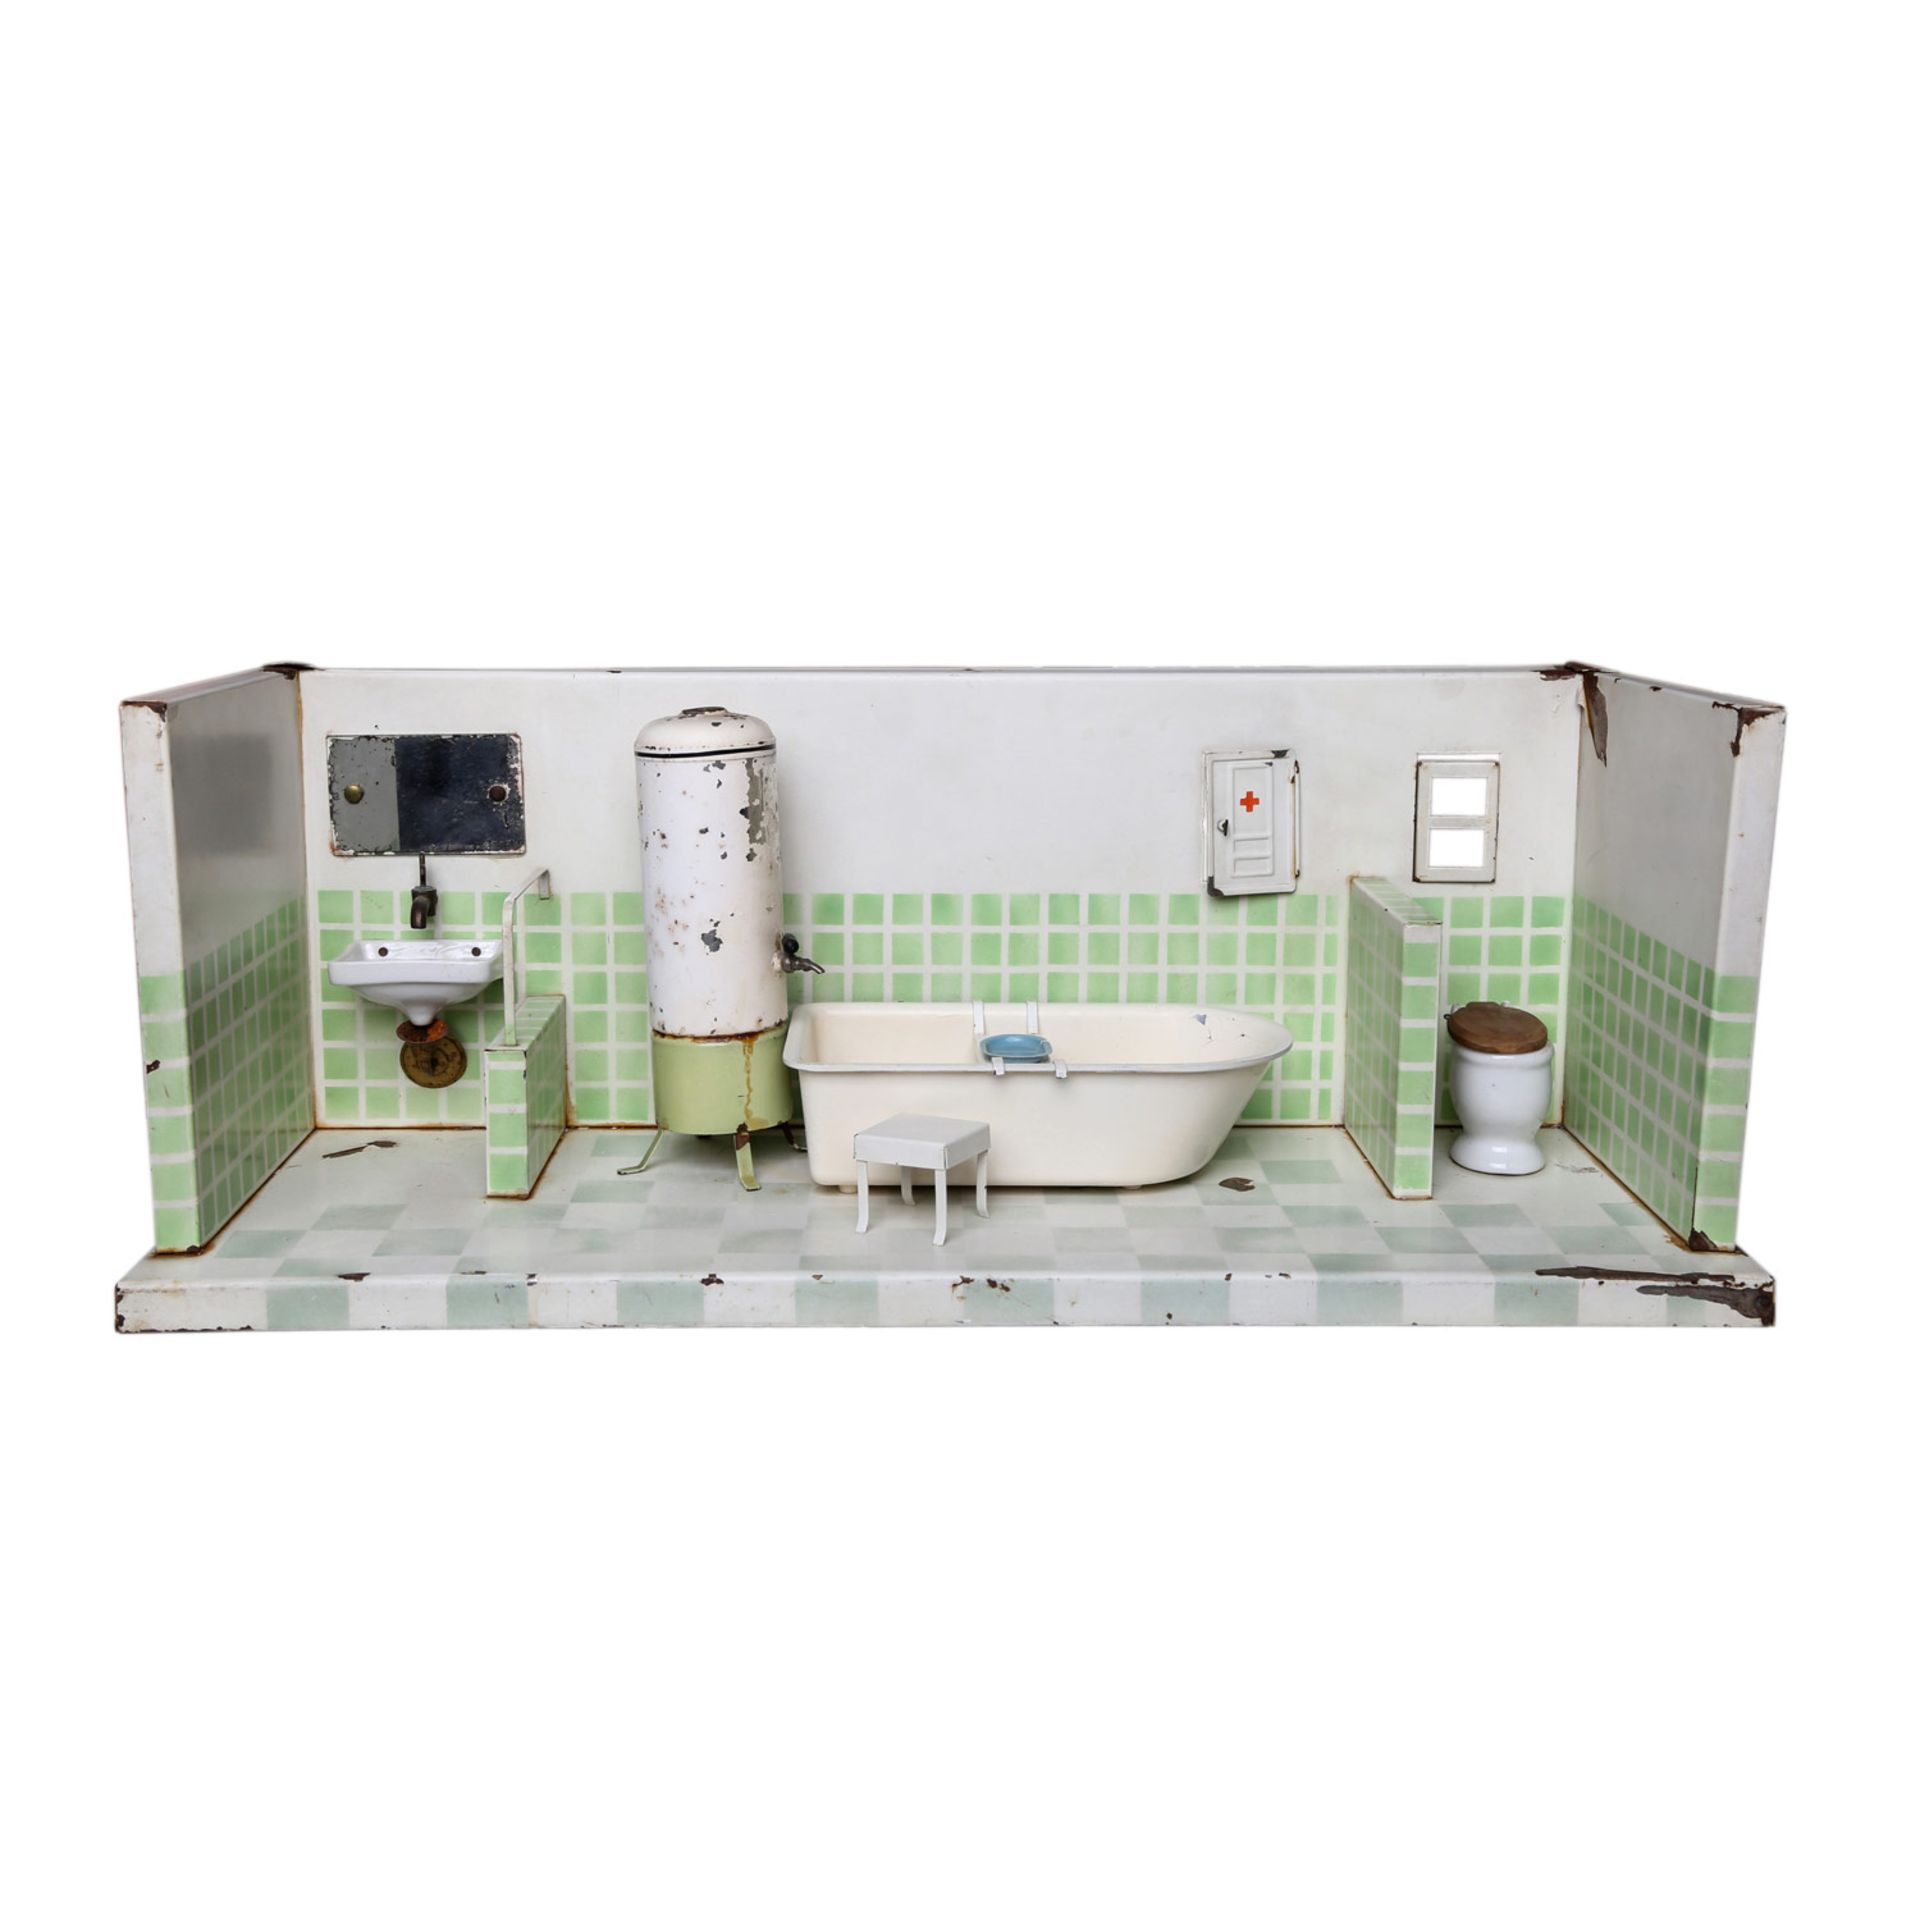 KIBRI Puppenbadezimmer, 1950er Jahre, Blech, beige-grüner Kacheldekor, Toilettenschüssel u. - Image 2 of 7